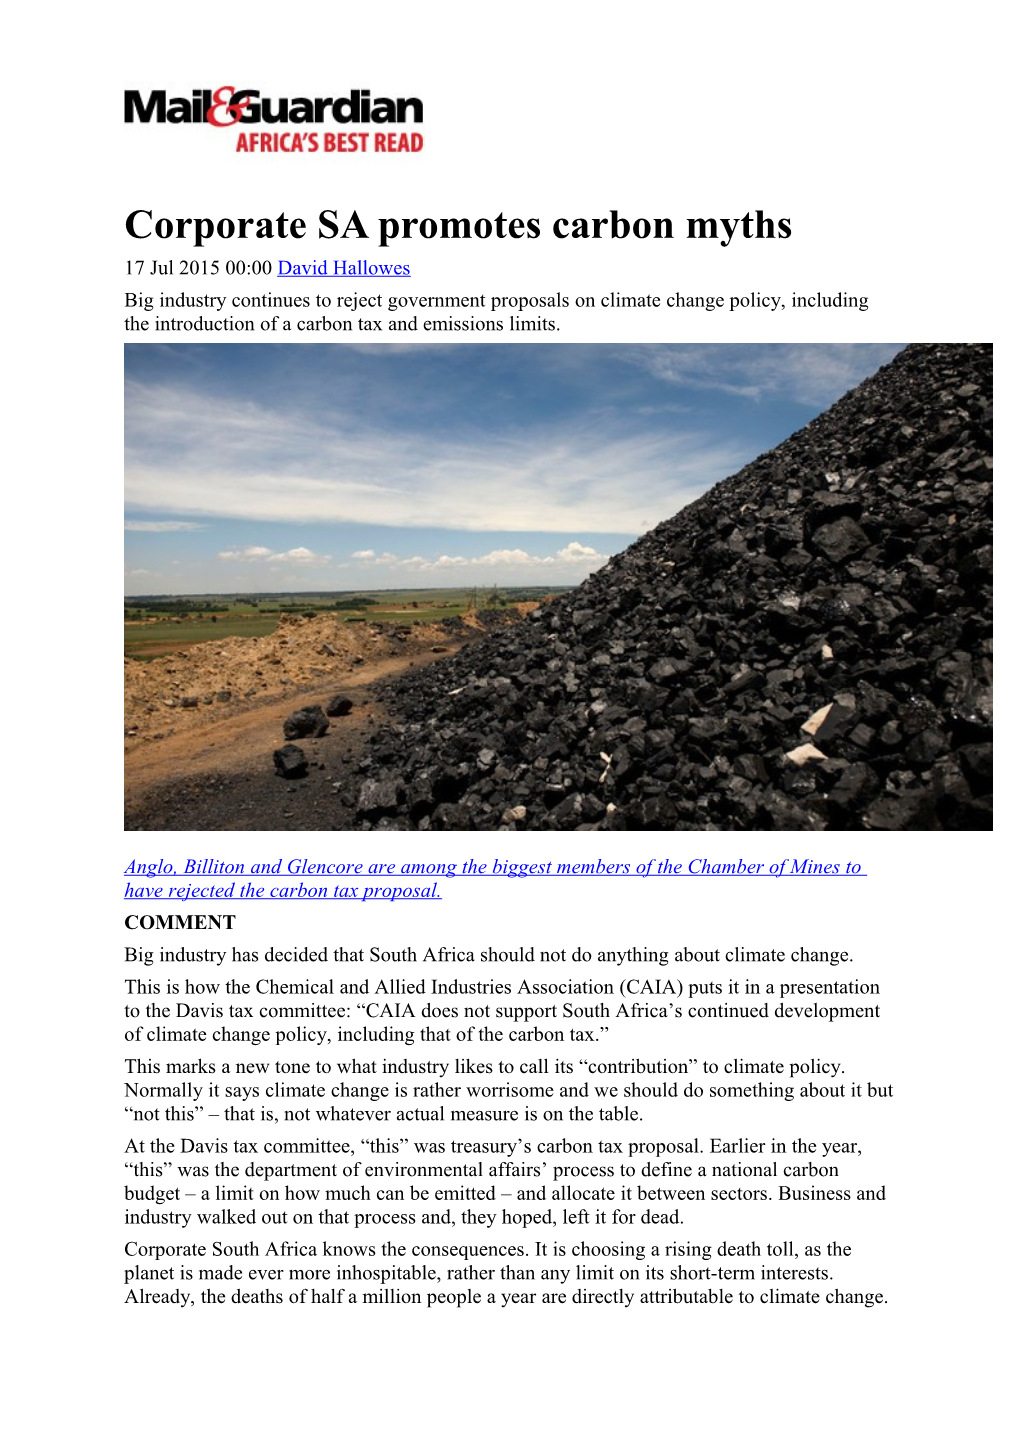 Corporate SA Promotes Carbon Myths